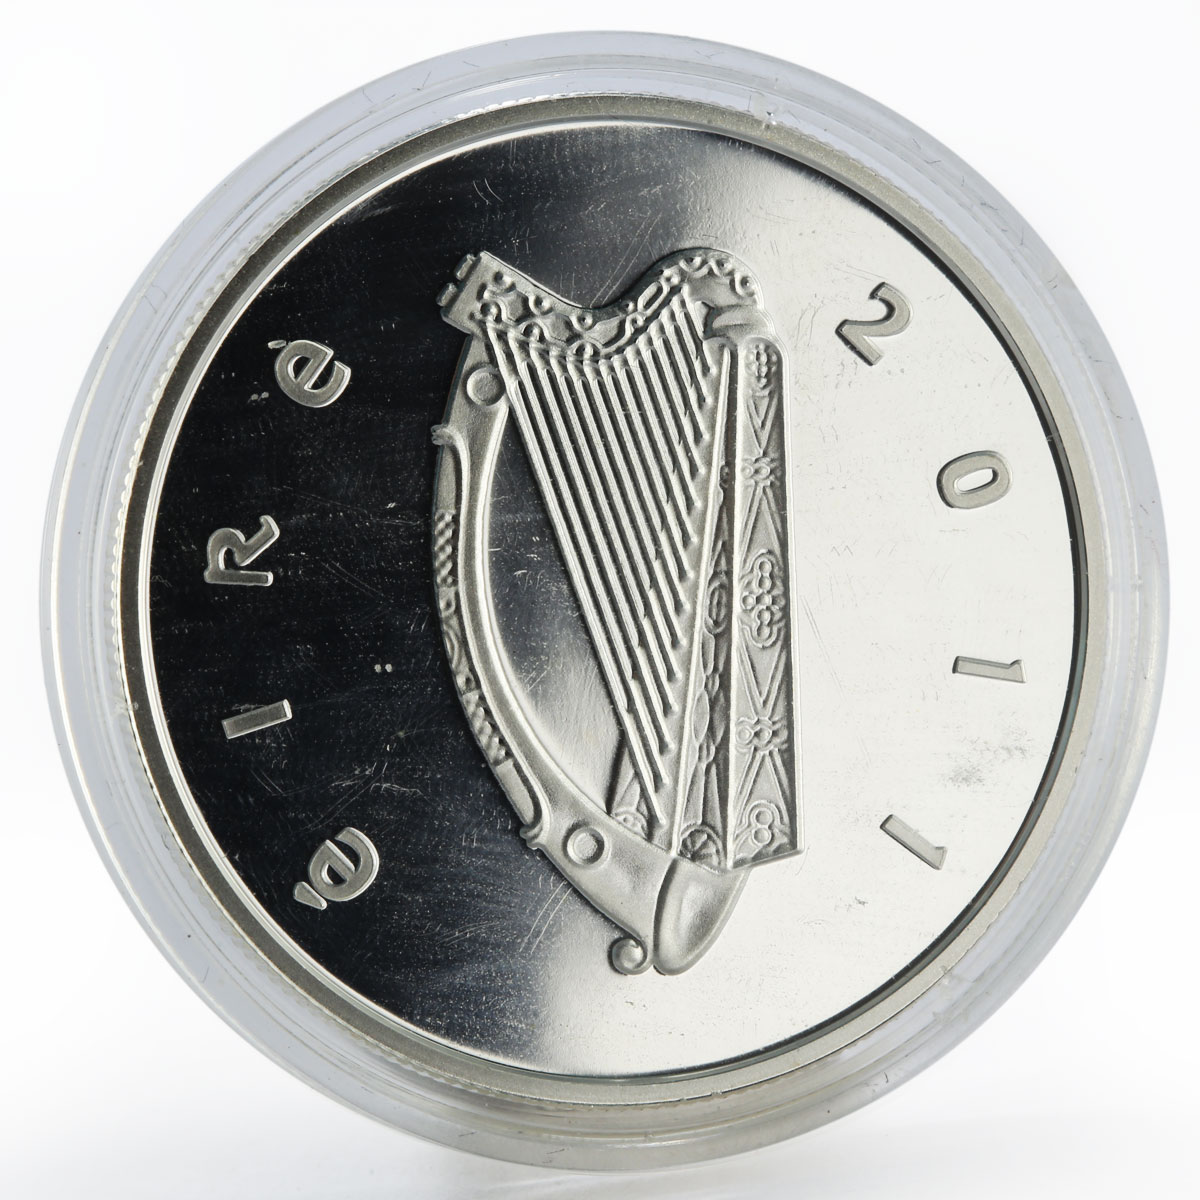 Ireland 15 euro Salmon Barnyard Series silver proof coin 2011